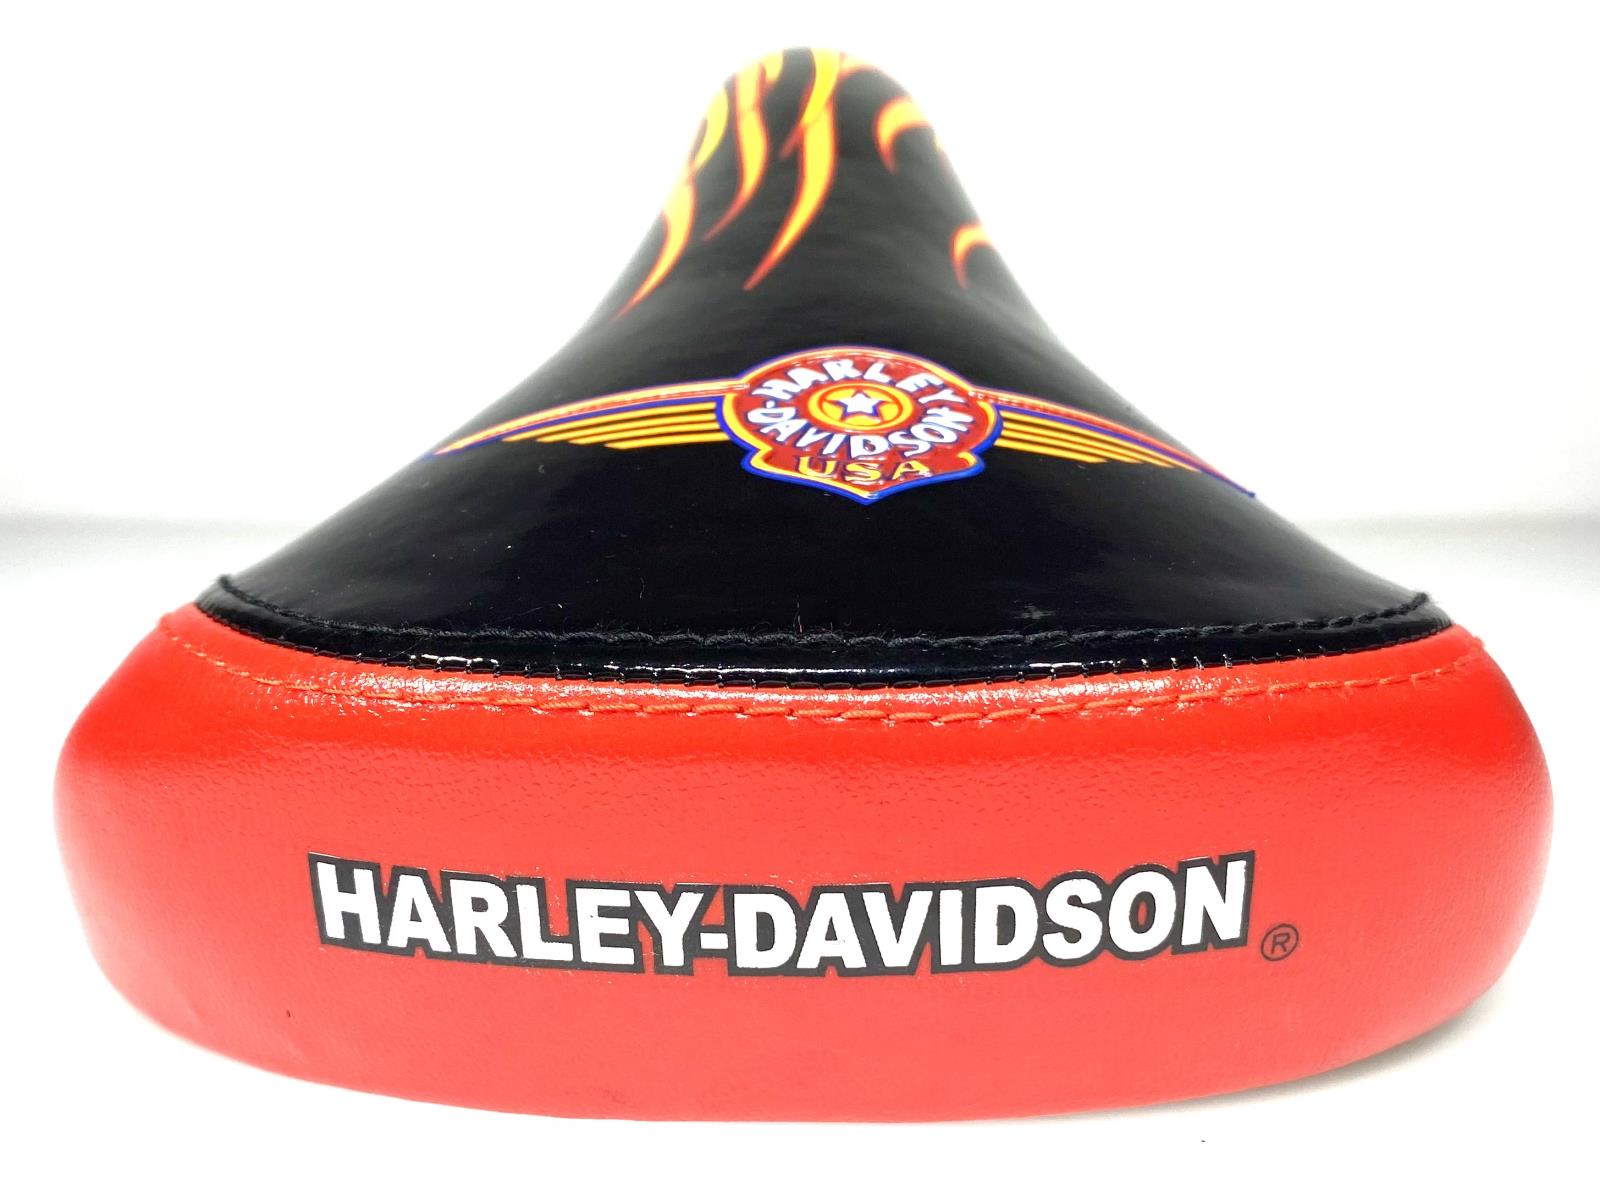 Harley-Davidson Cionlli Black/Red Flame Kids Bike Saddle Seat With Mount New - Random Bike Parts